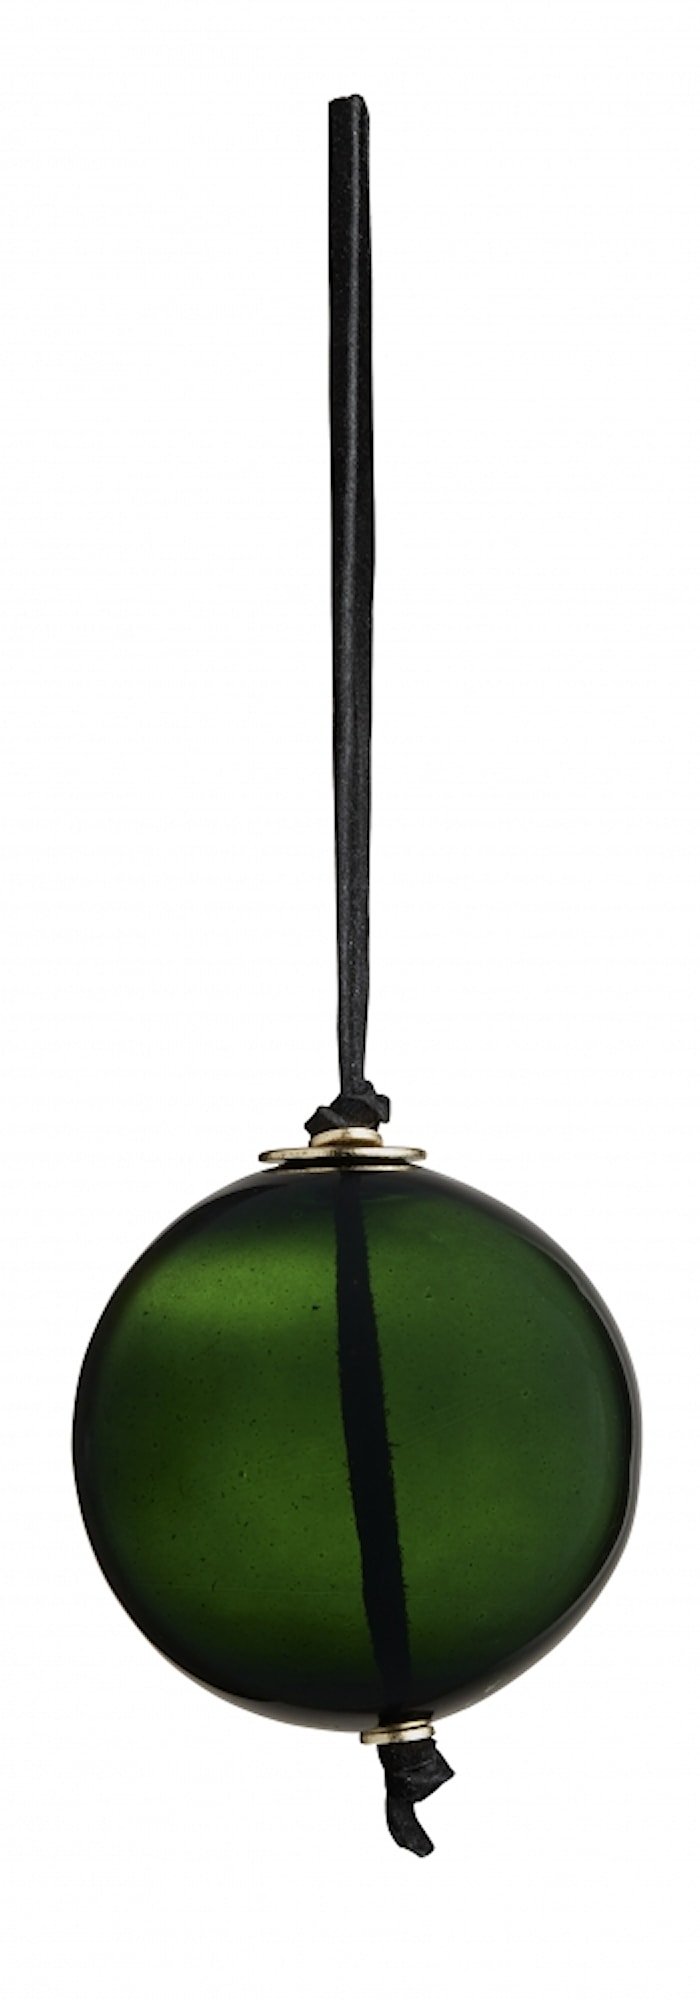 Boule de Noël verre daim vert 8 cm